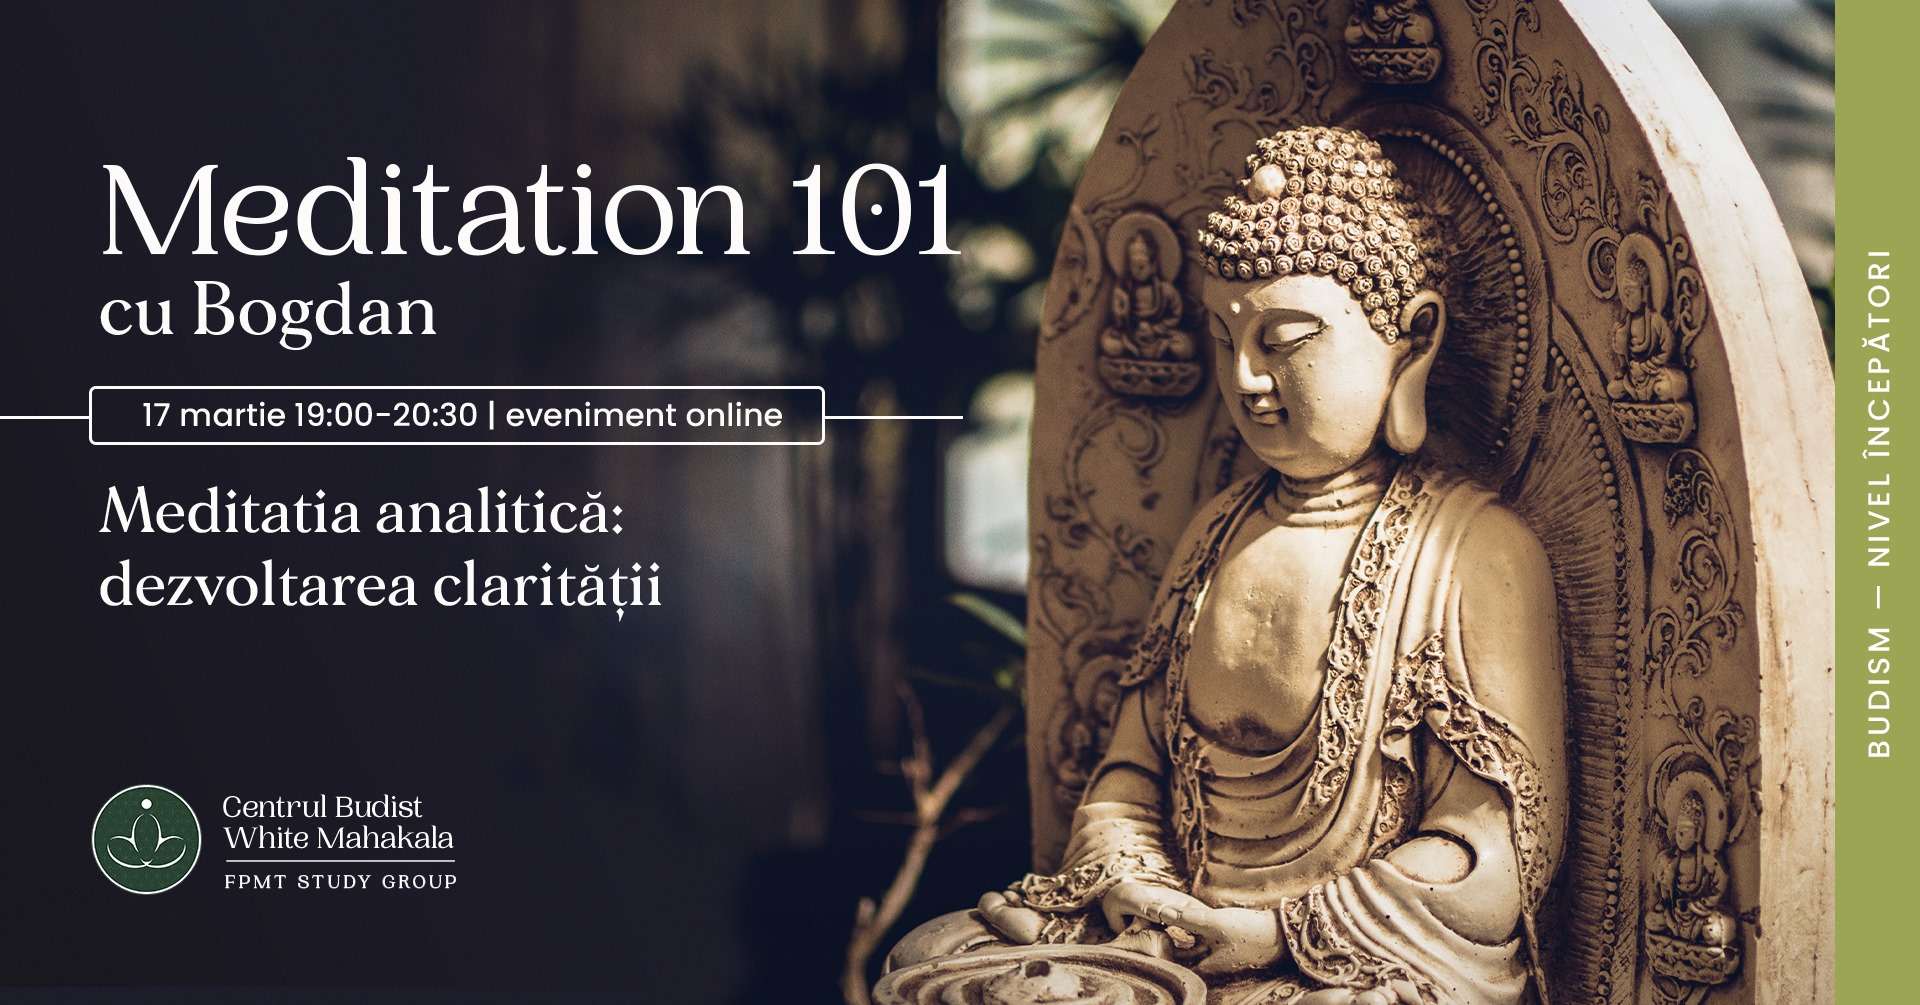 MEDITATION 101- Meditatia analitica: dezvoltarea claritatii